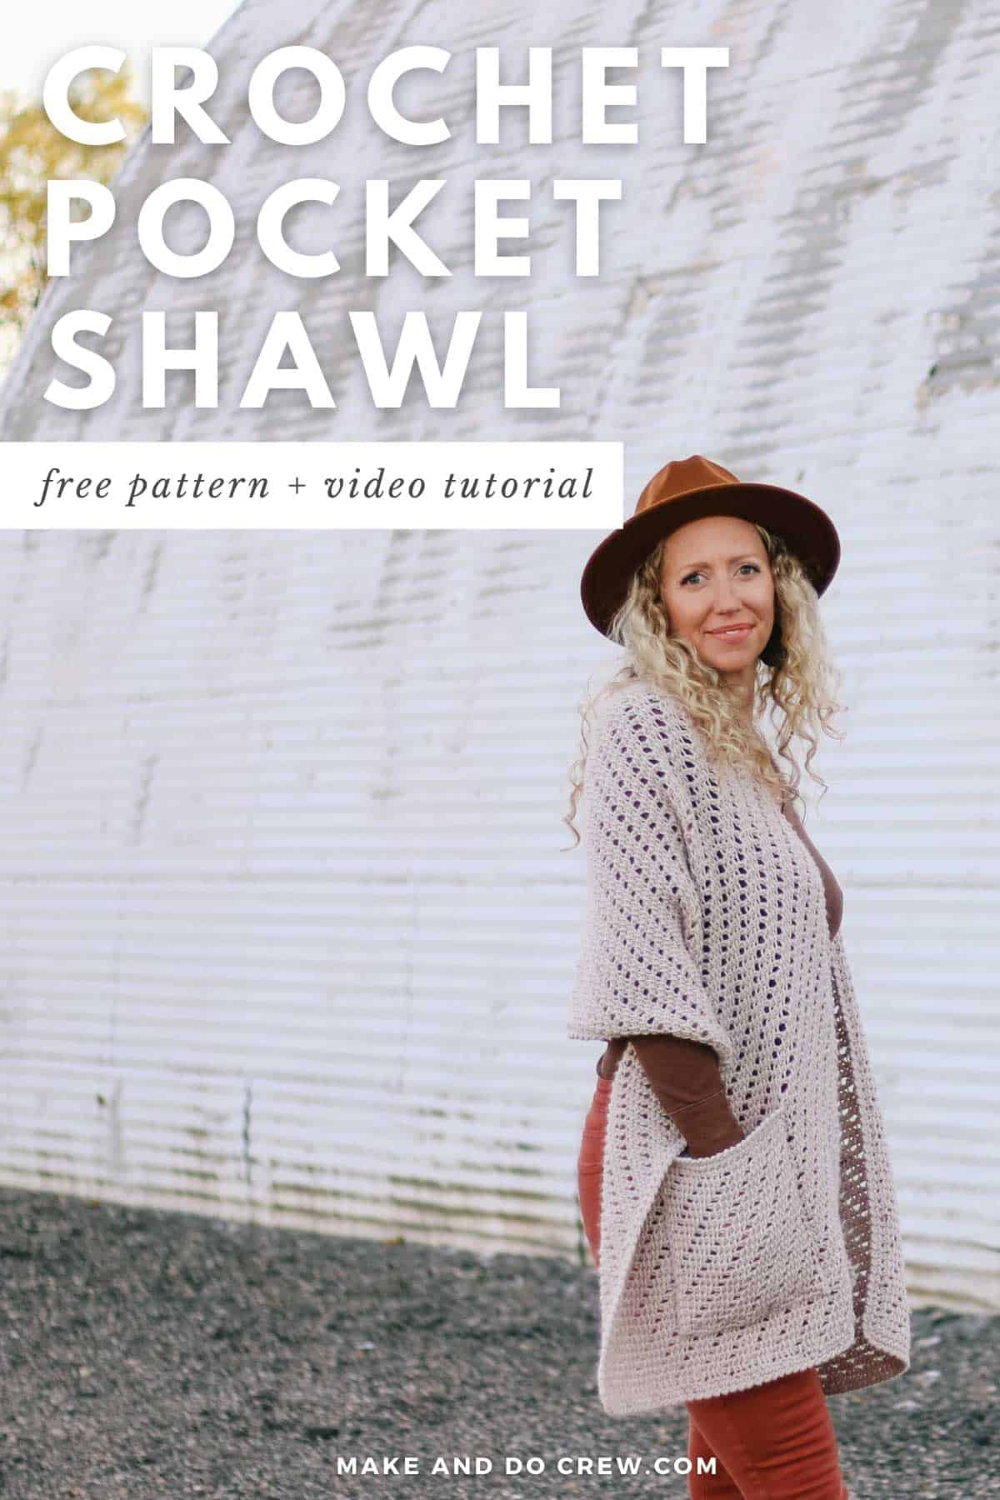 Crochet a Pocket Shawl